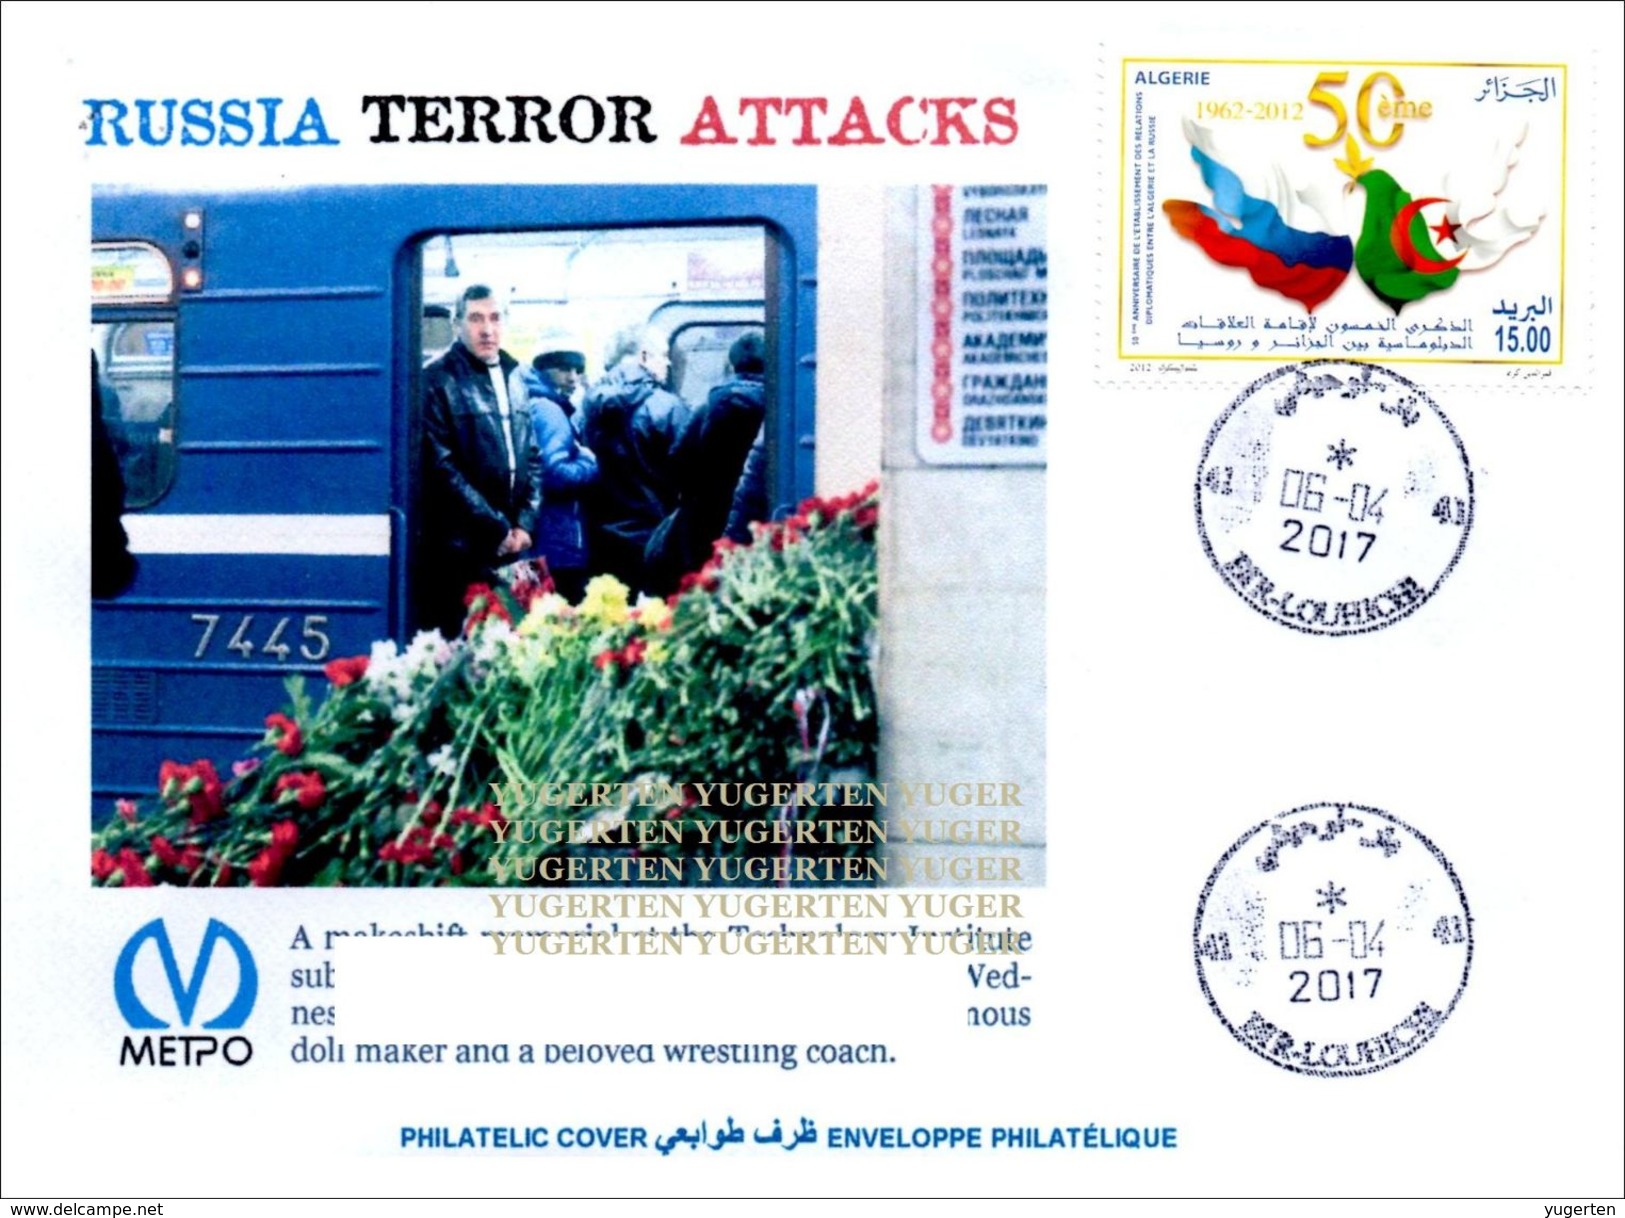 ALGHERIA 2017 Cover St Petersburg Metro Terrorist Attacks - Cancelled Date Of Attacks Terrorism Russia Railways - Enveloppes